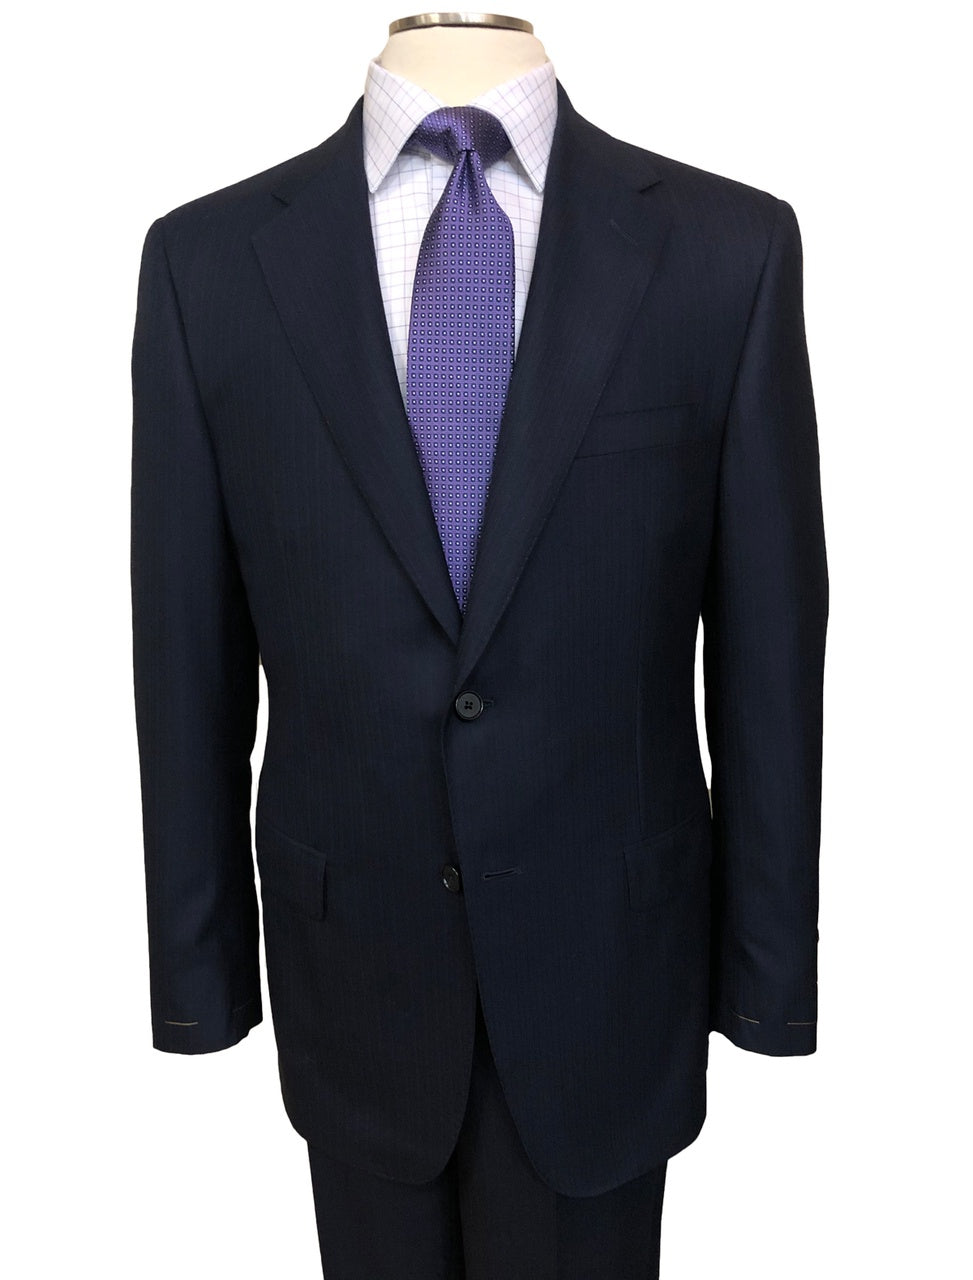 Hickey Freeman Tasmanian Super 170s Suit: Addison in Navy Tonal Stripe